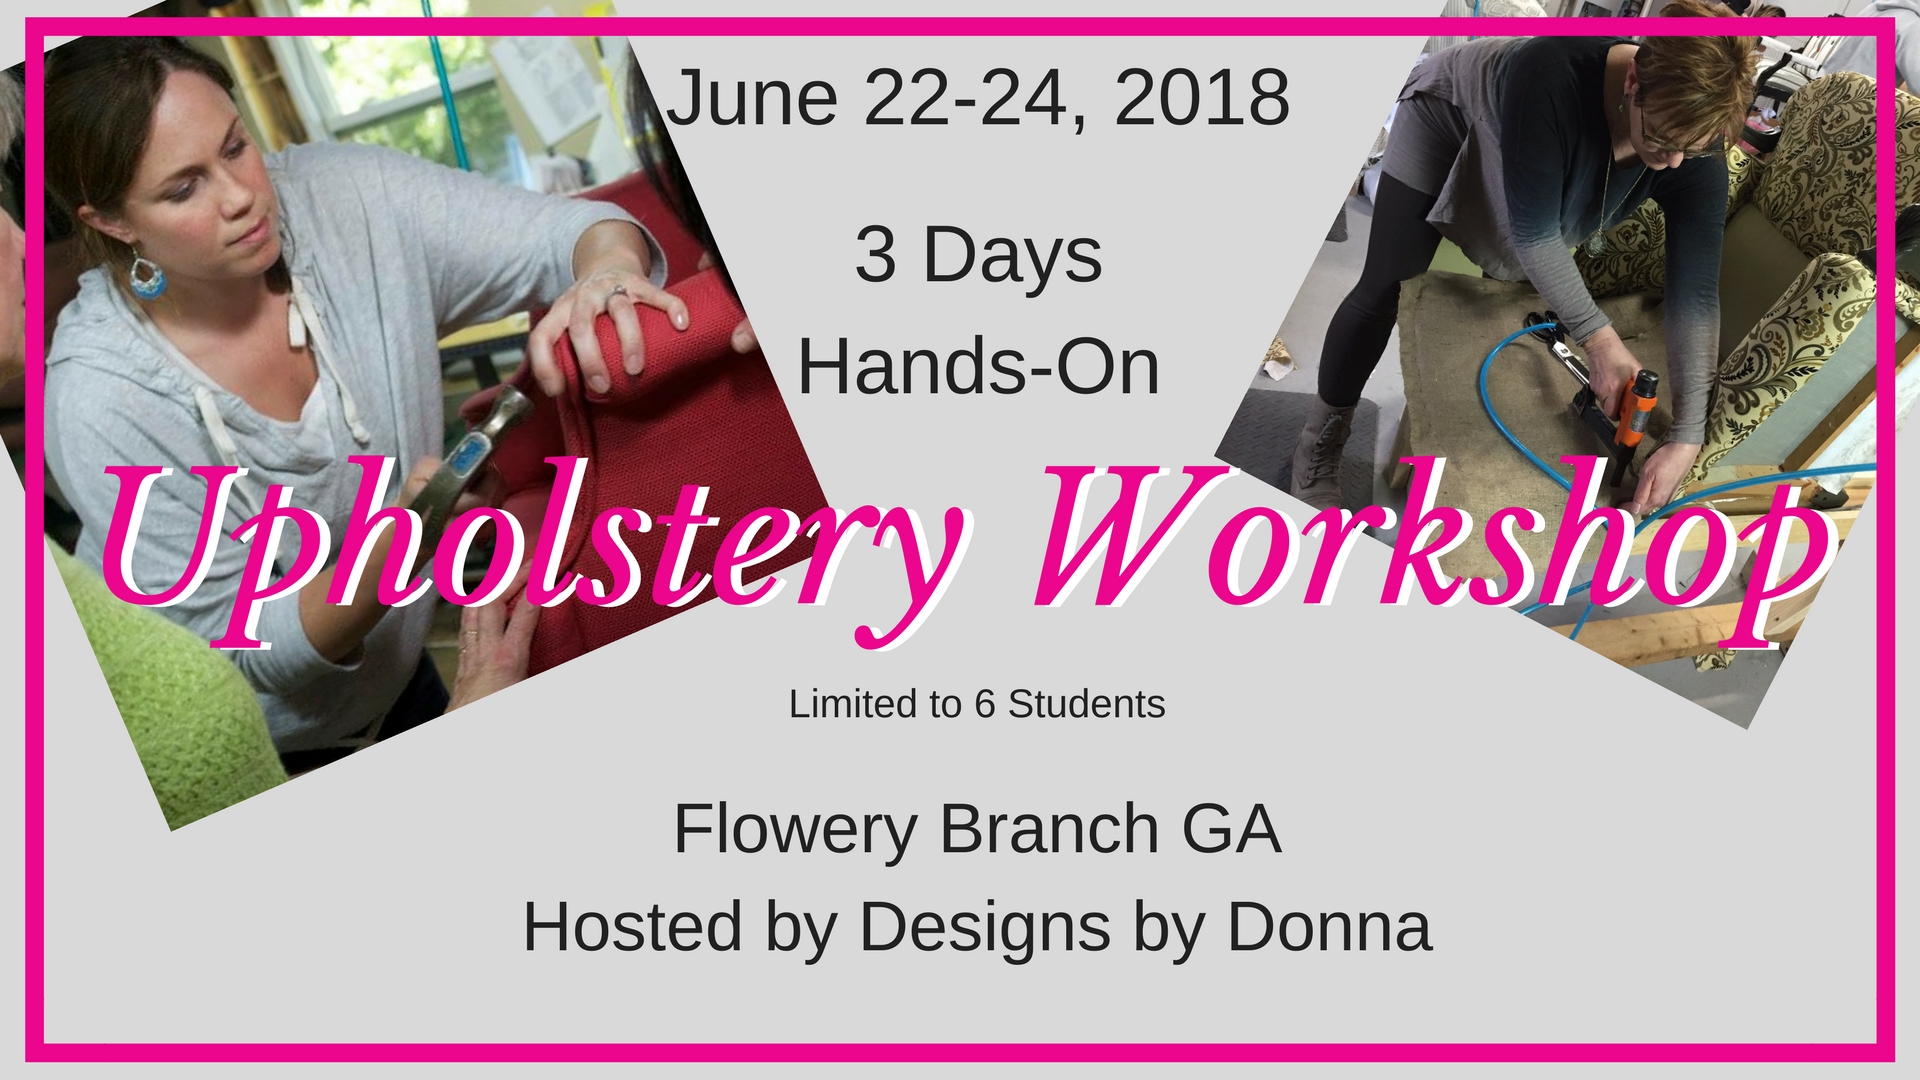 Upholstery Workshop Flowery Branch June 22-24, 2018